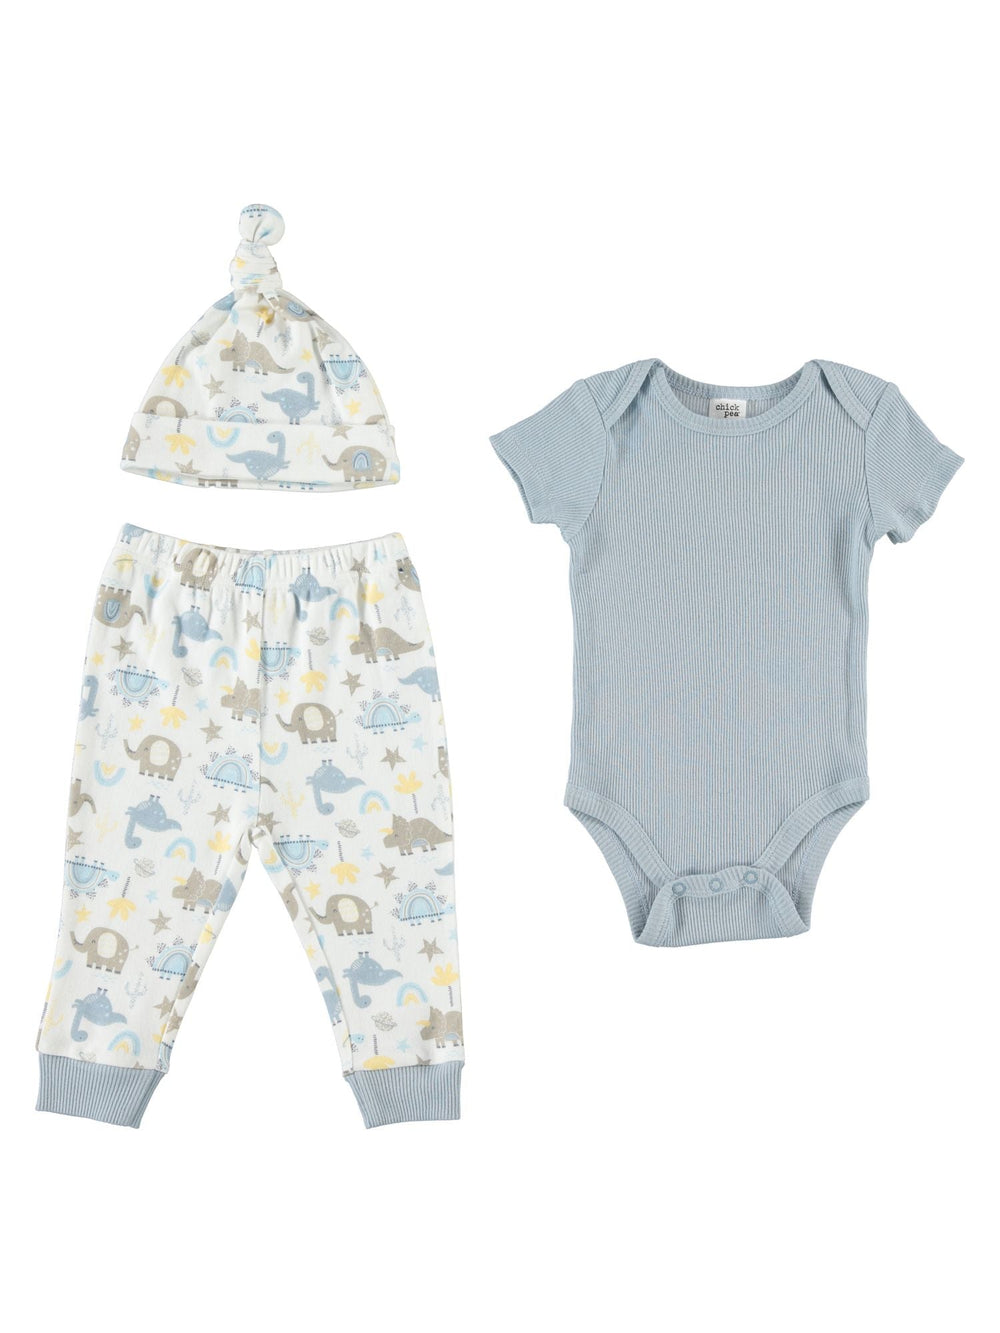 Baby-Unisex-Newborn-Essentials-Jogger-Set-Clothes-Baby-Registry-Shower-Gift-Onesie-Pants-Hat-3Pack-Image2